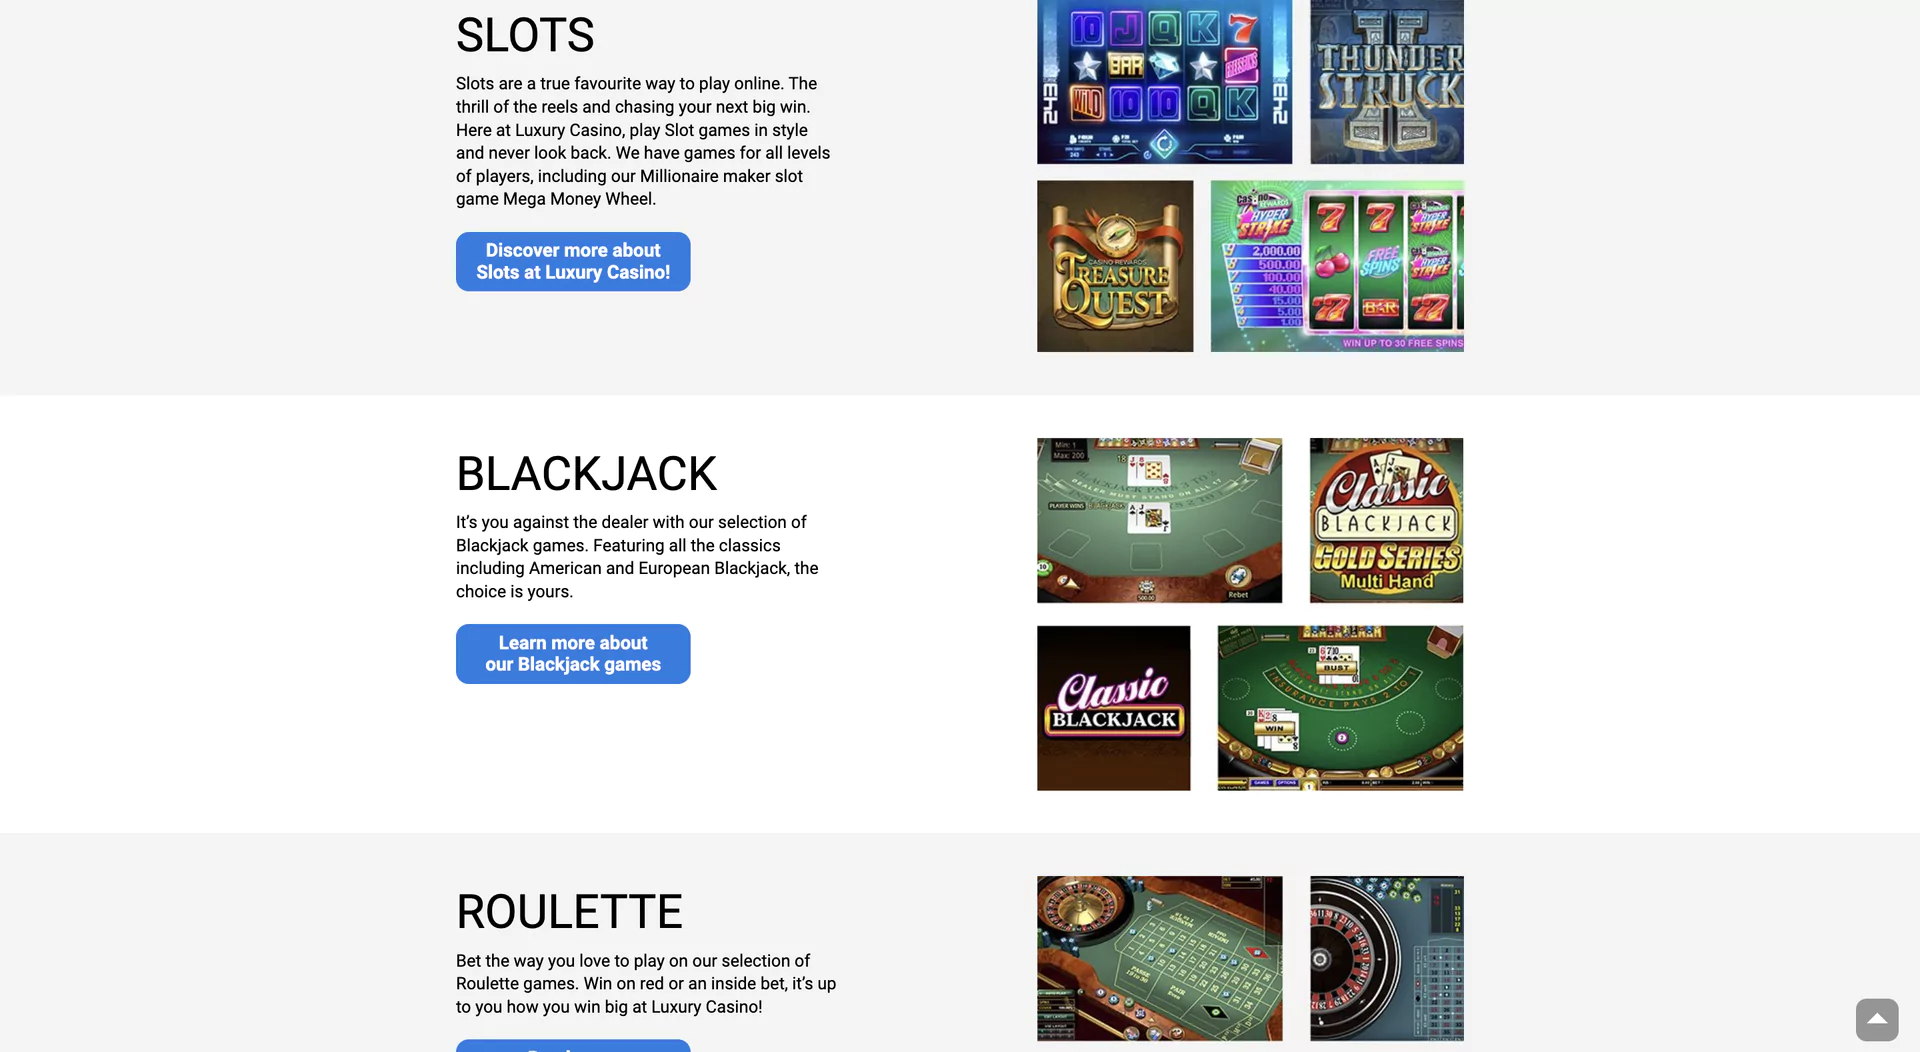 Games at Luxury Casino